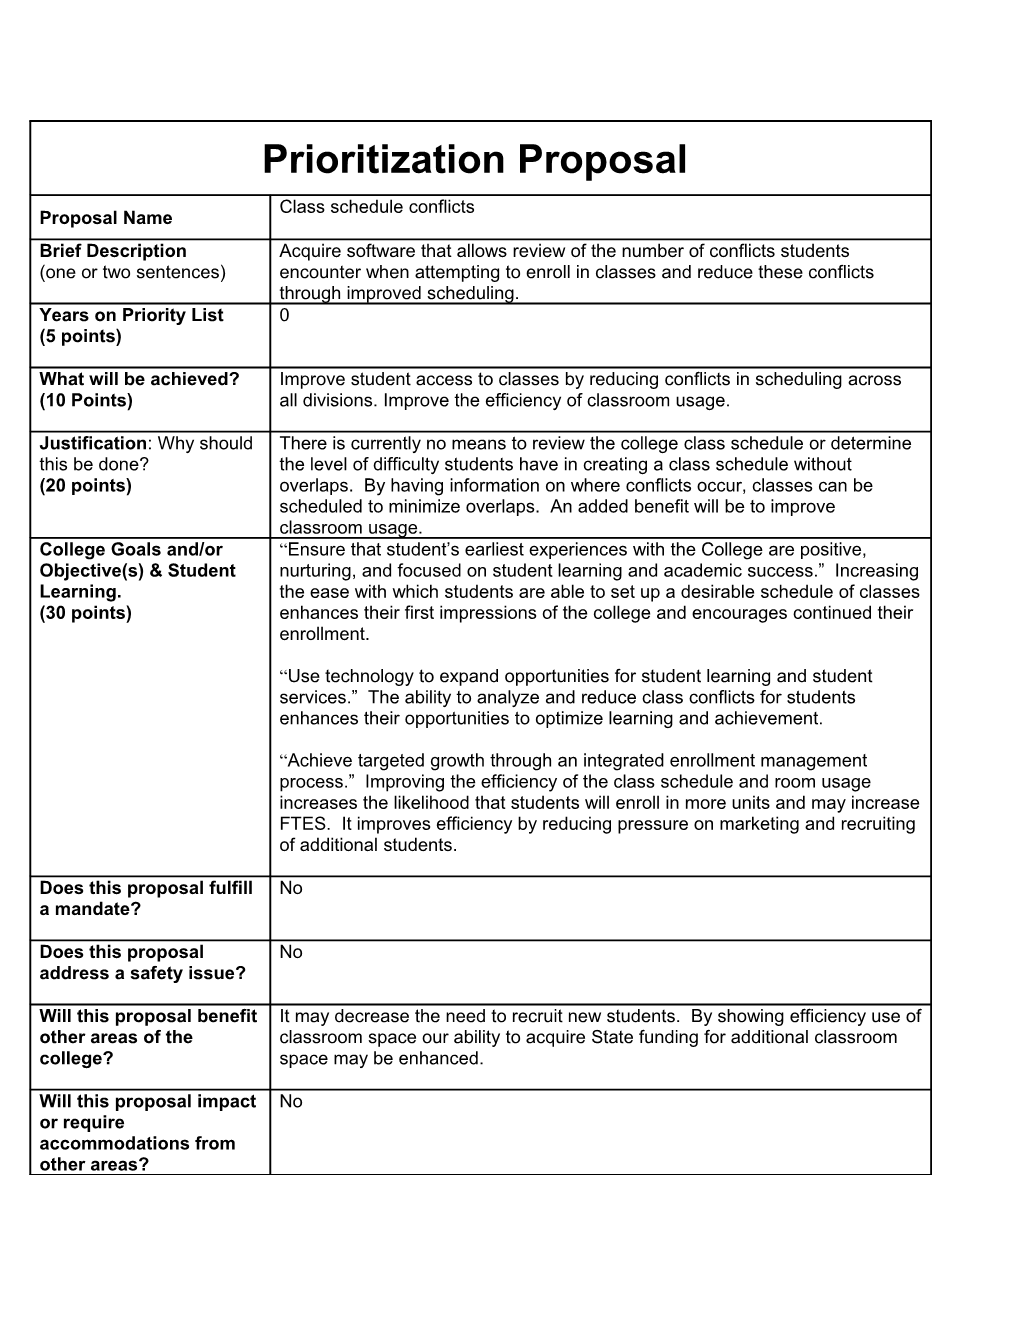 Prioritization Proposal (Sample) s1